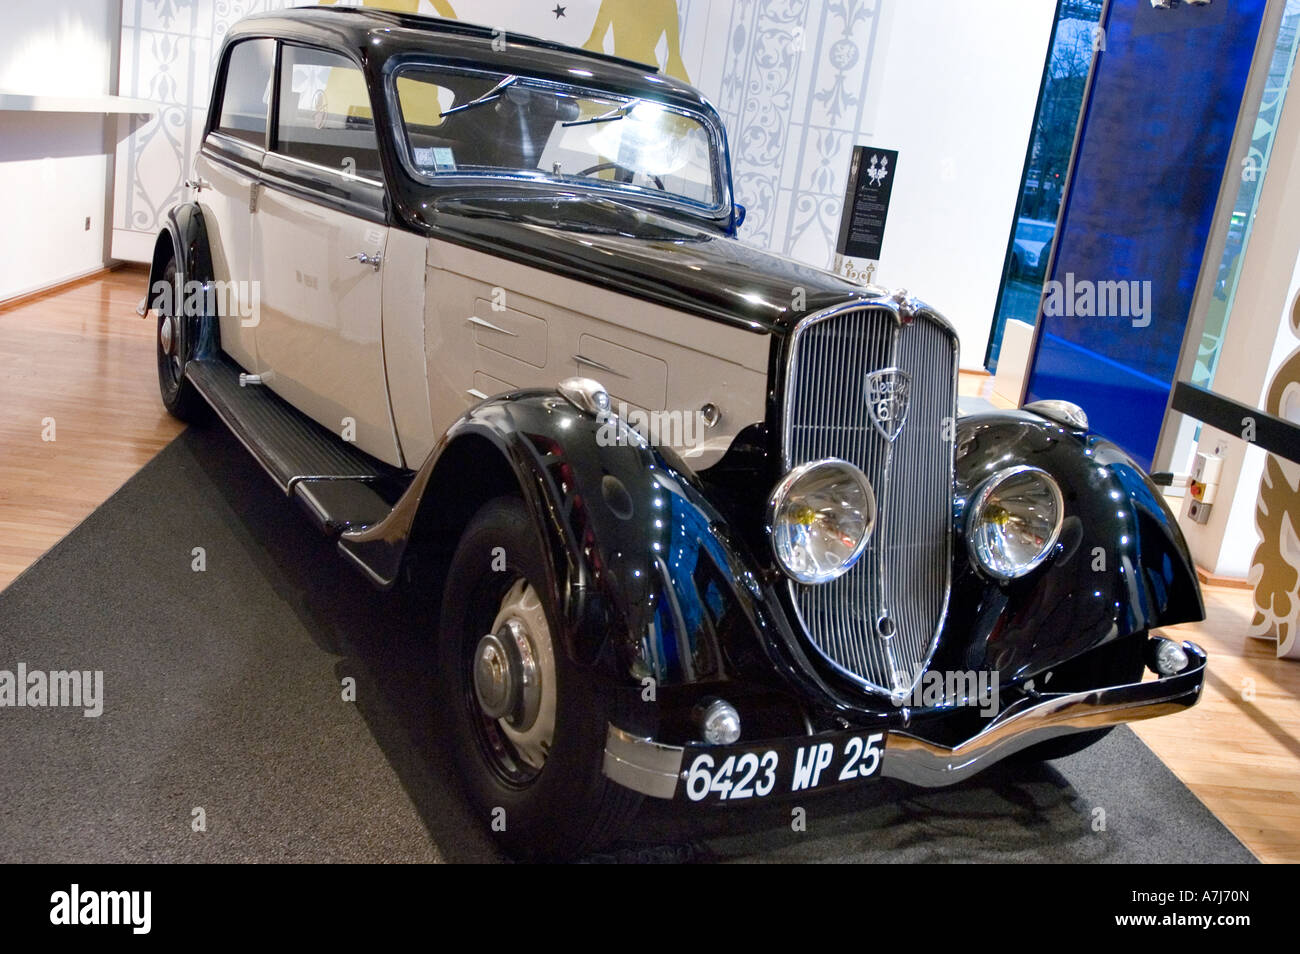 Peugeot 601 Berline Teilintegrierte 1934 Auto bei Peugeot Avenue Extravaganza Shop Unter Den Linden Berlin Deutschland Stockfoto